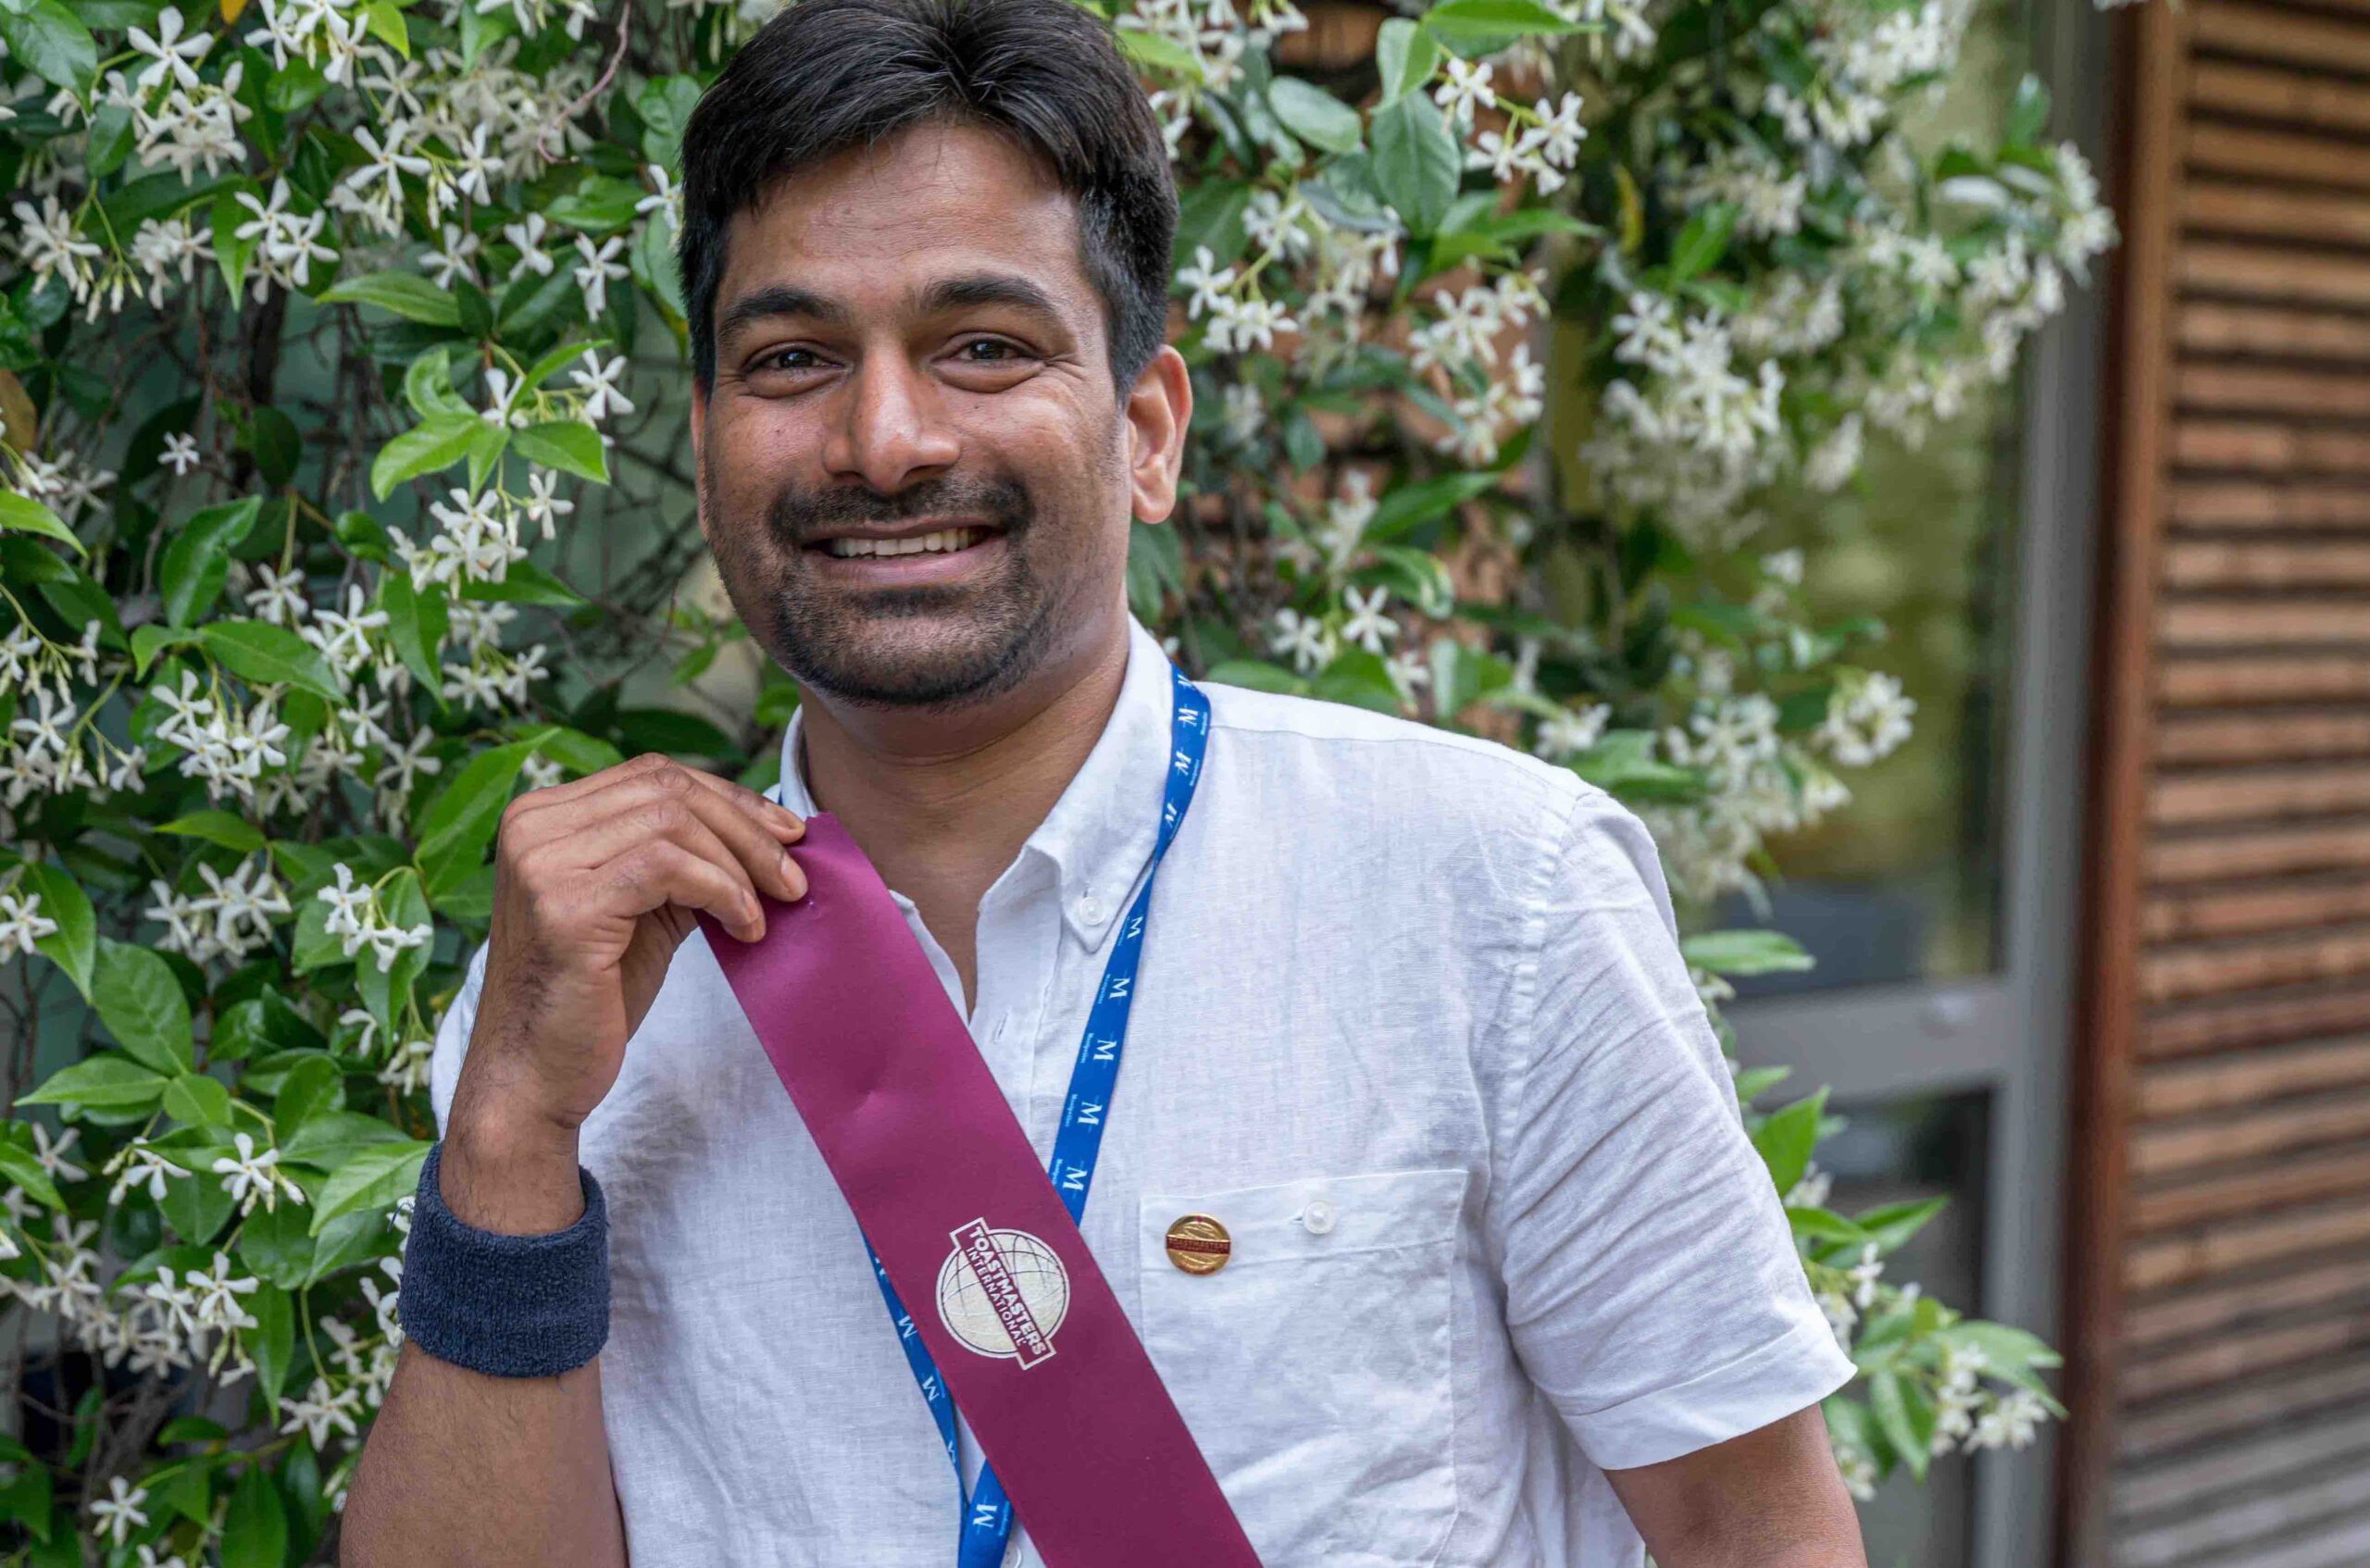 Area Director Prashant Kadam with his Home of Area Director ribbon and Director pin